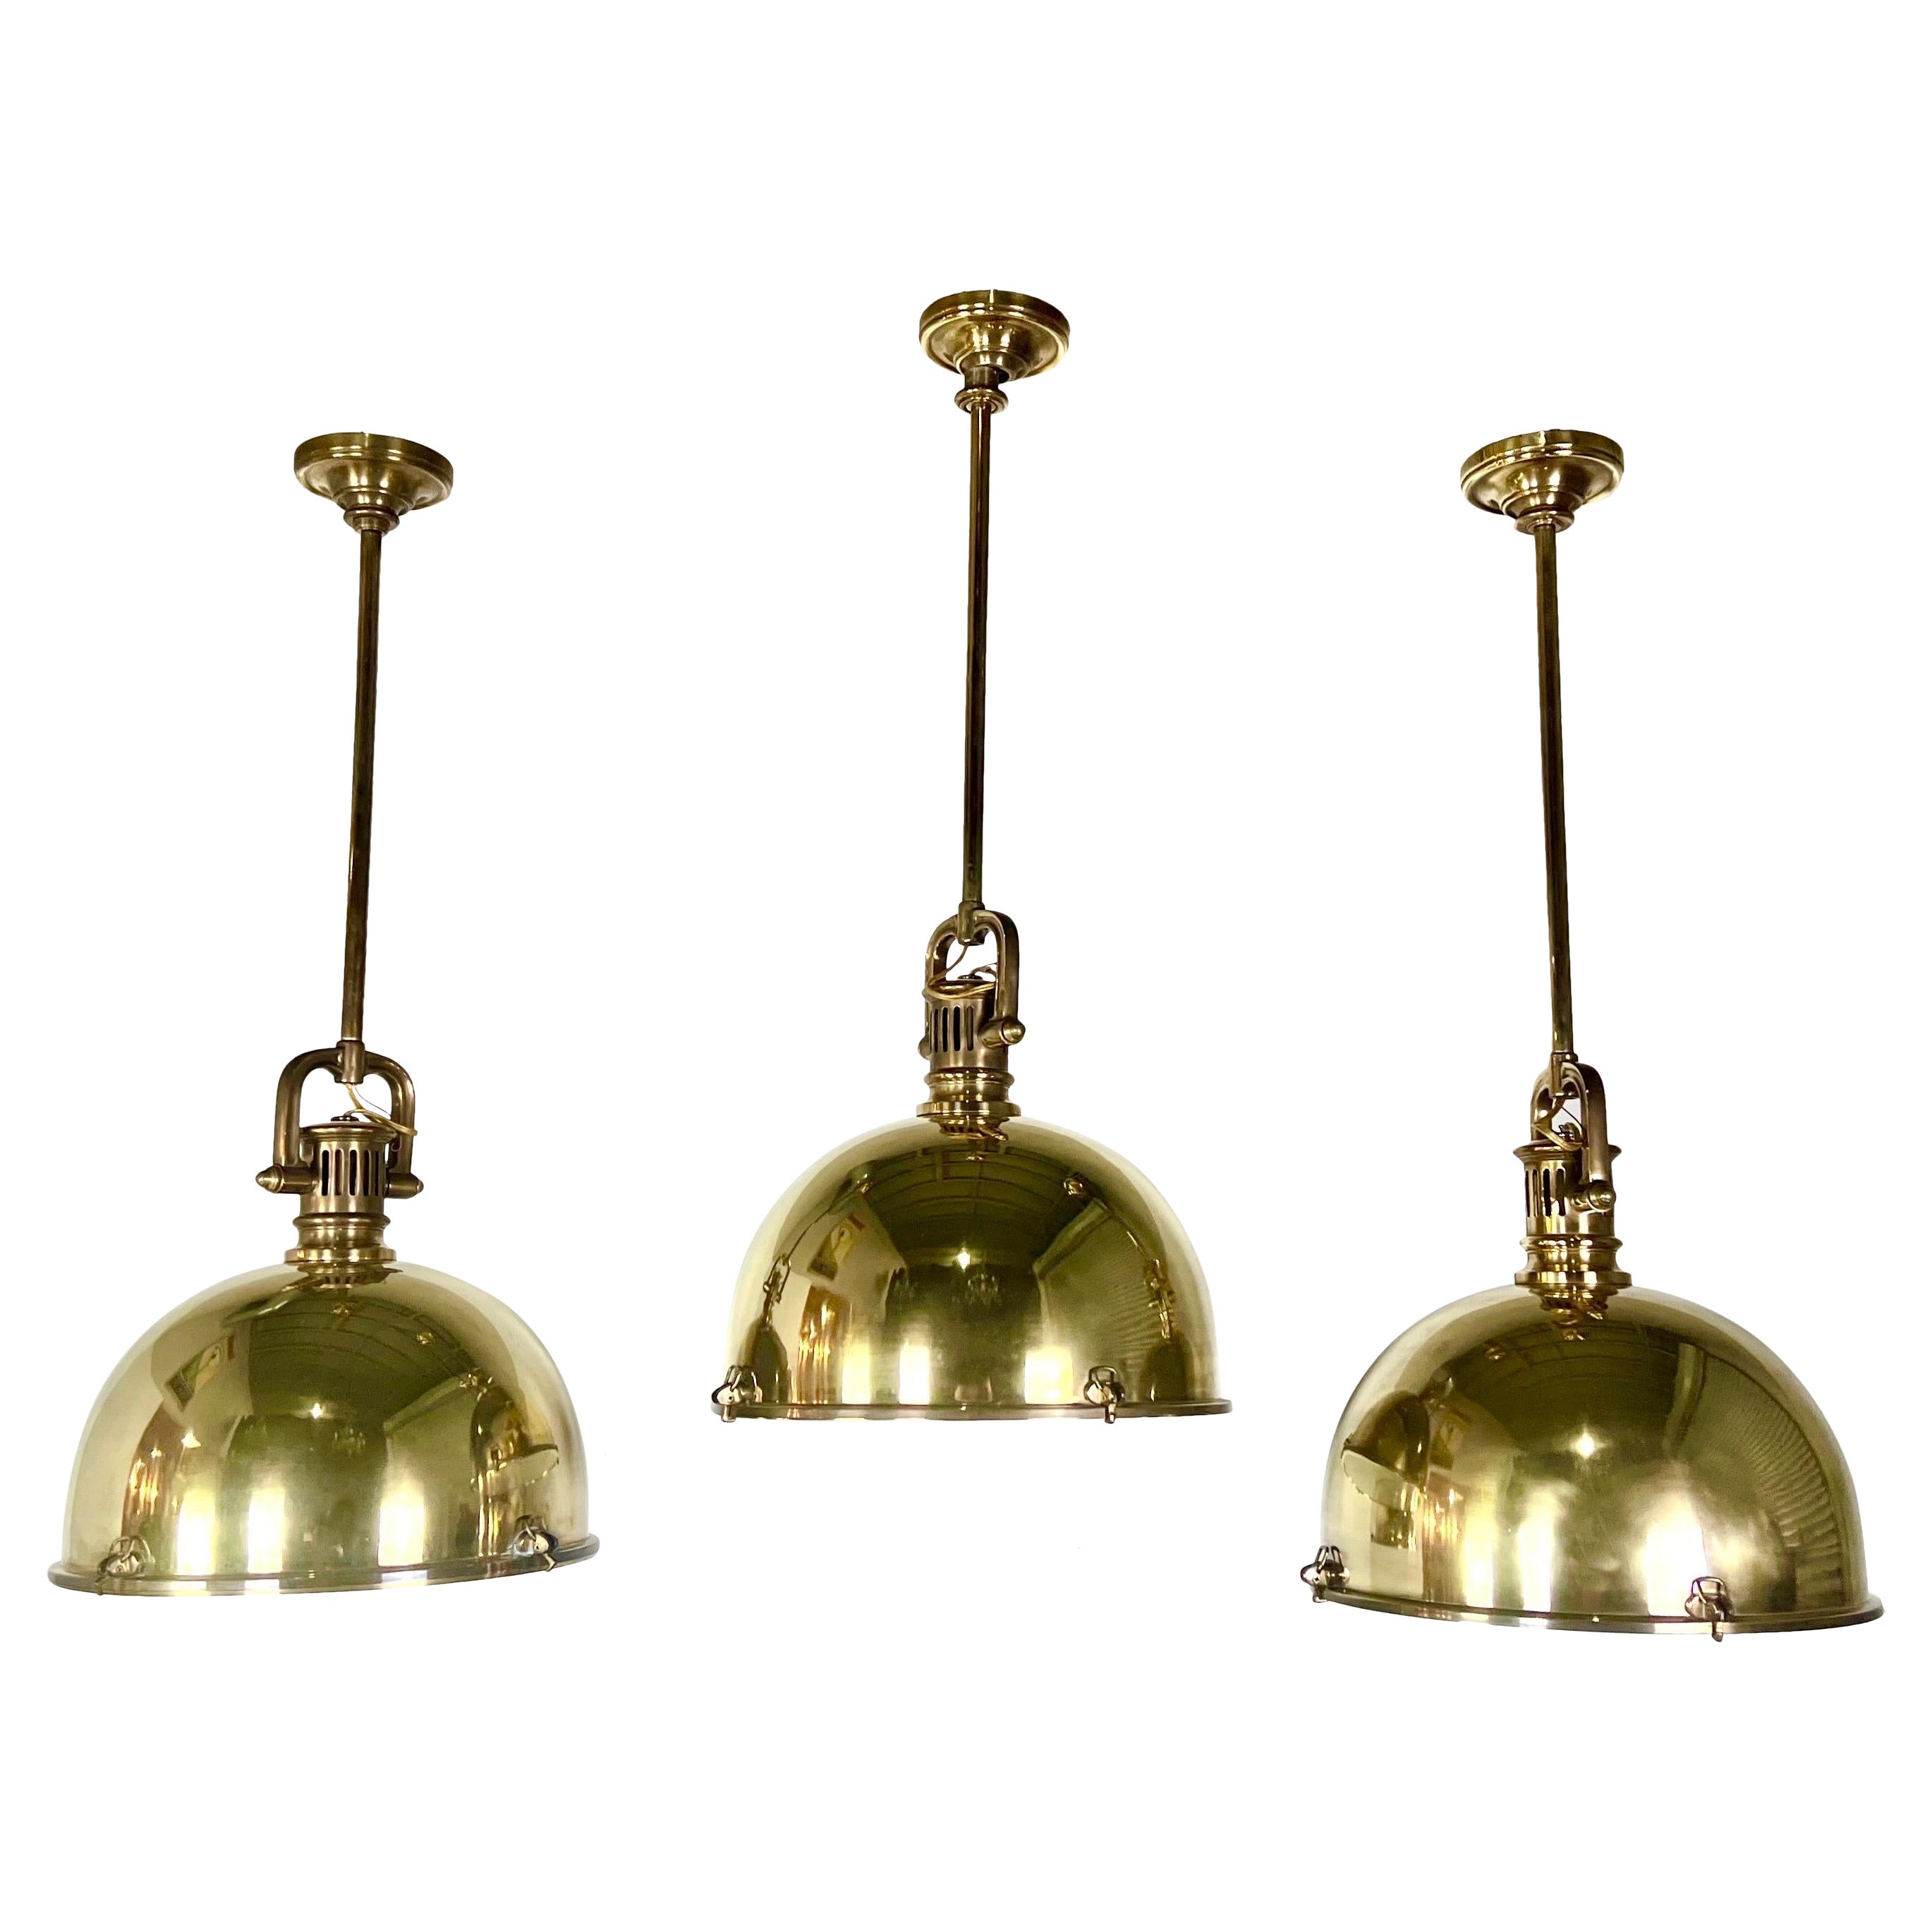 Set of Three Monumental Brass Domed Shaped Pendants 